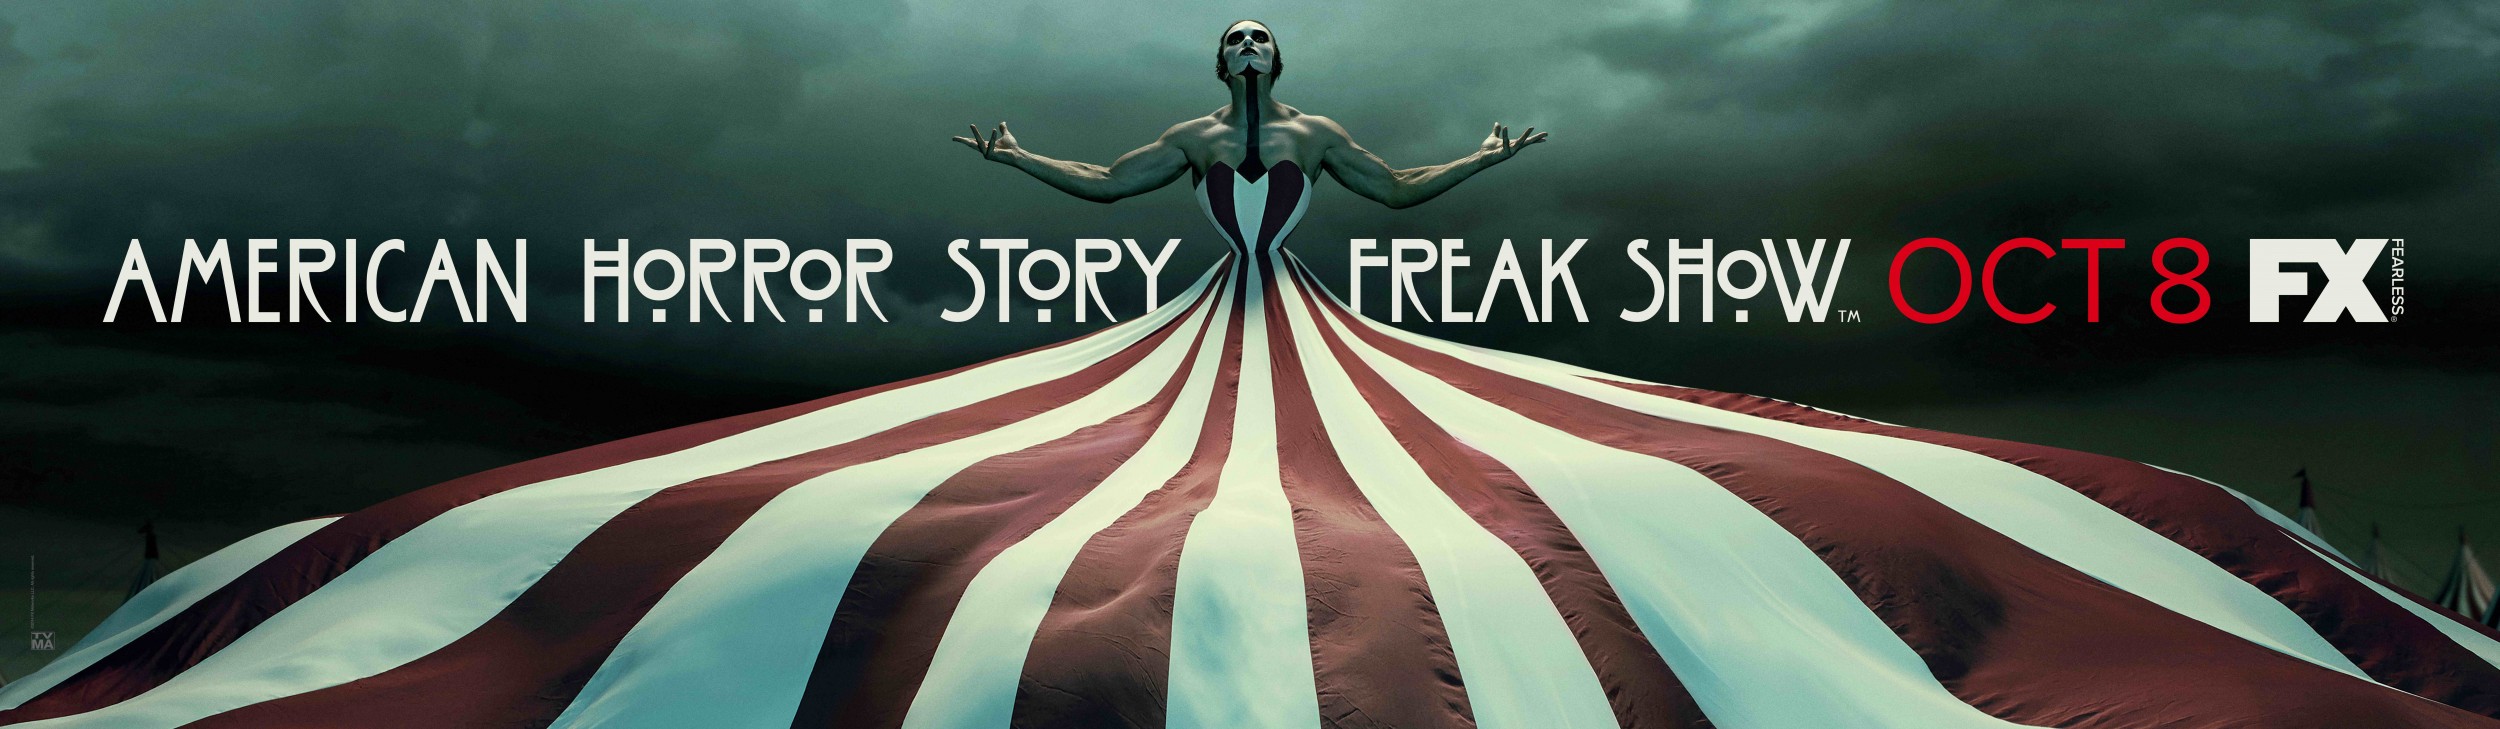 Mega Sized TV Poster Image for American Horror Story (#25 of 175)